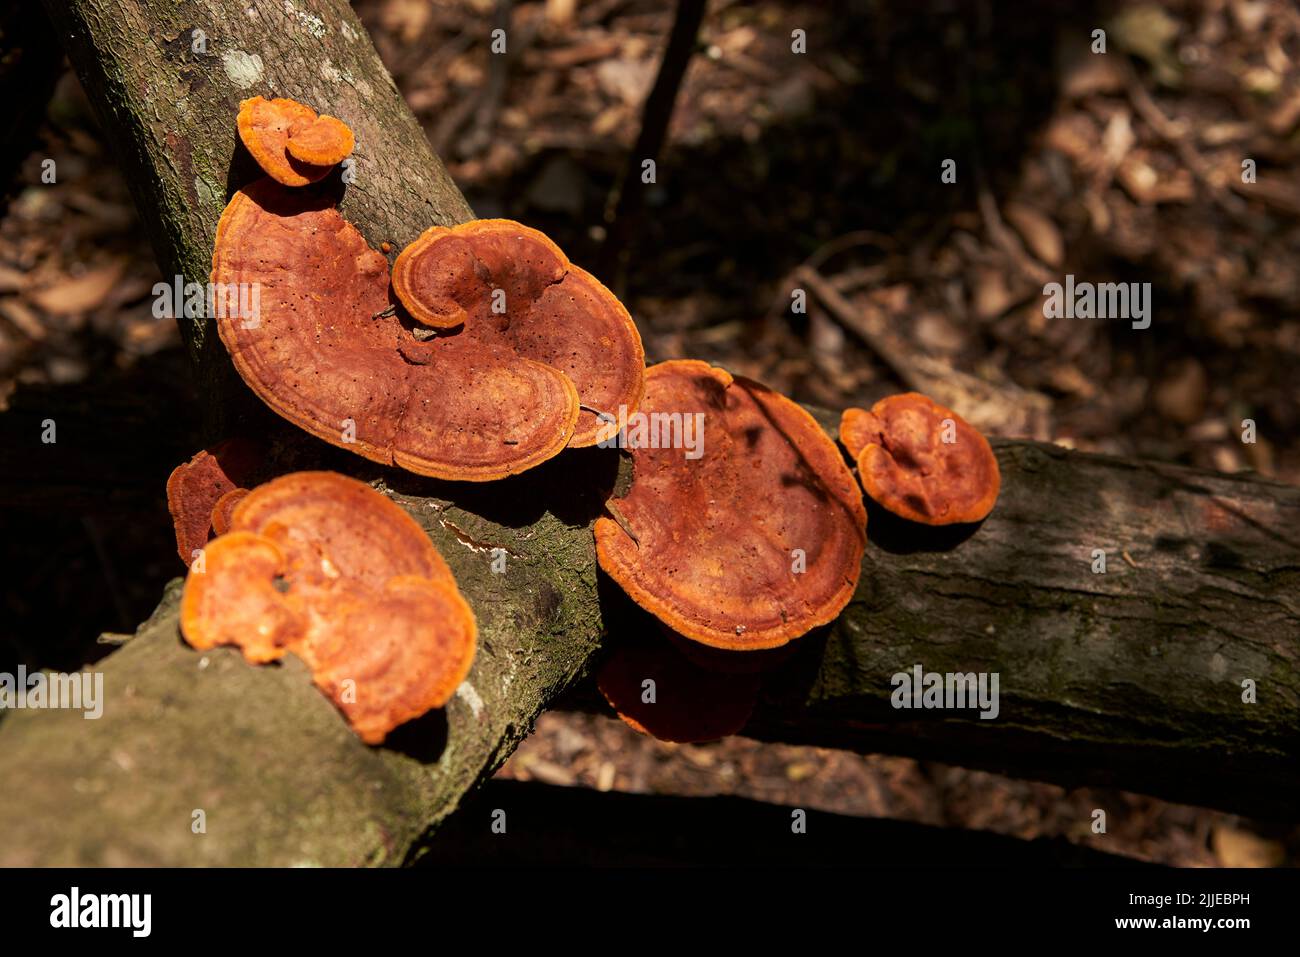 Pycnoporus sanguineus, known as shelf fungus, on the trunk of a fallen tree in El Palmar National Park, Entre Rios, Argentina Stock Photo